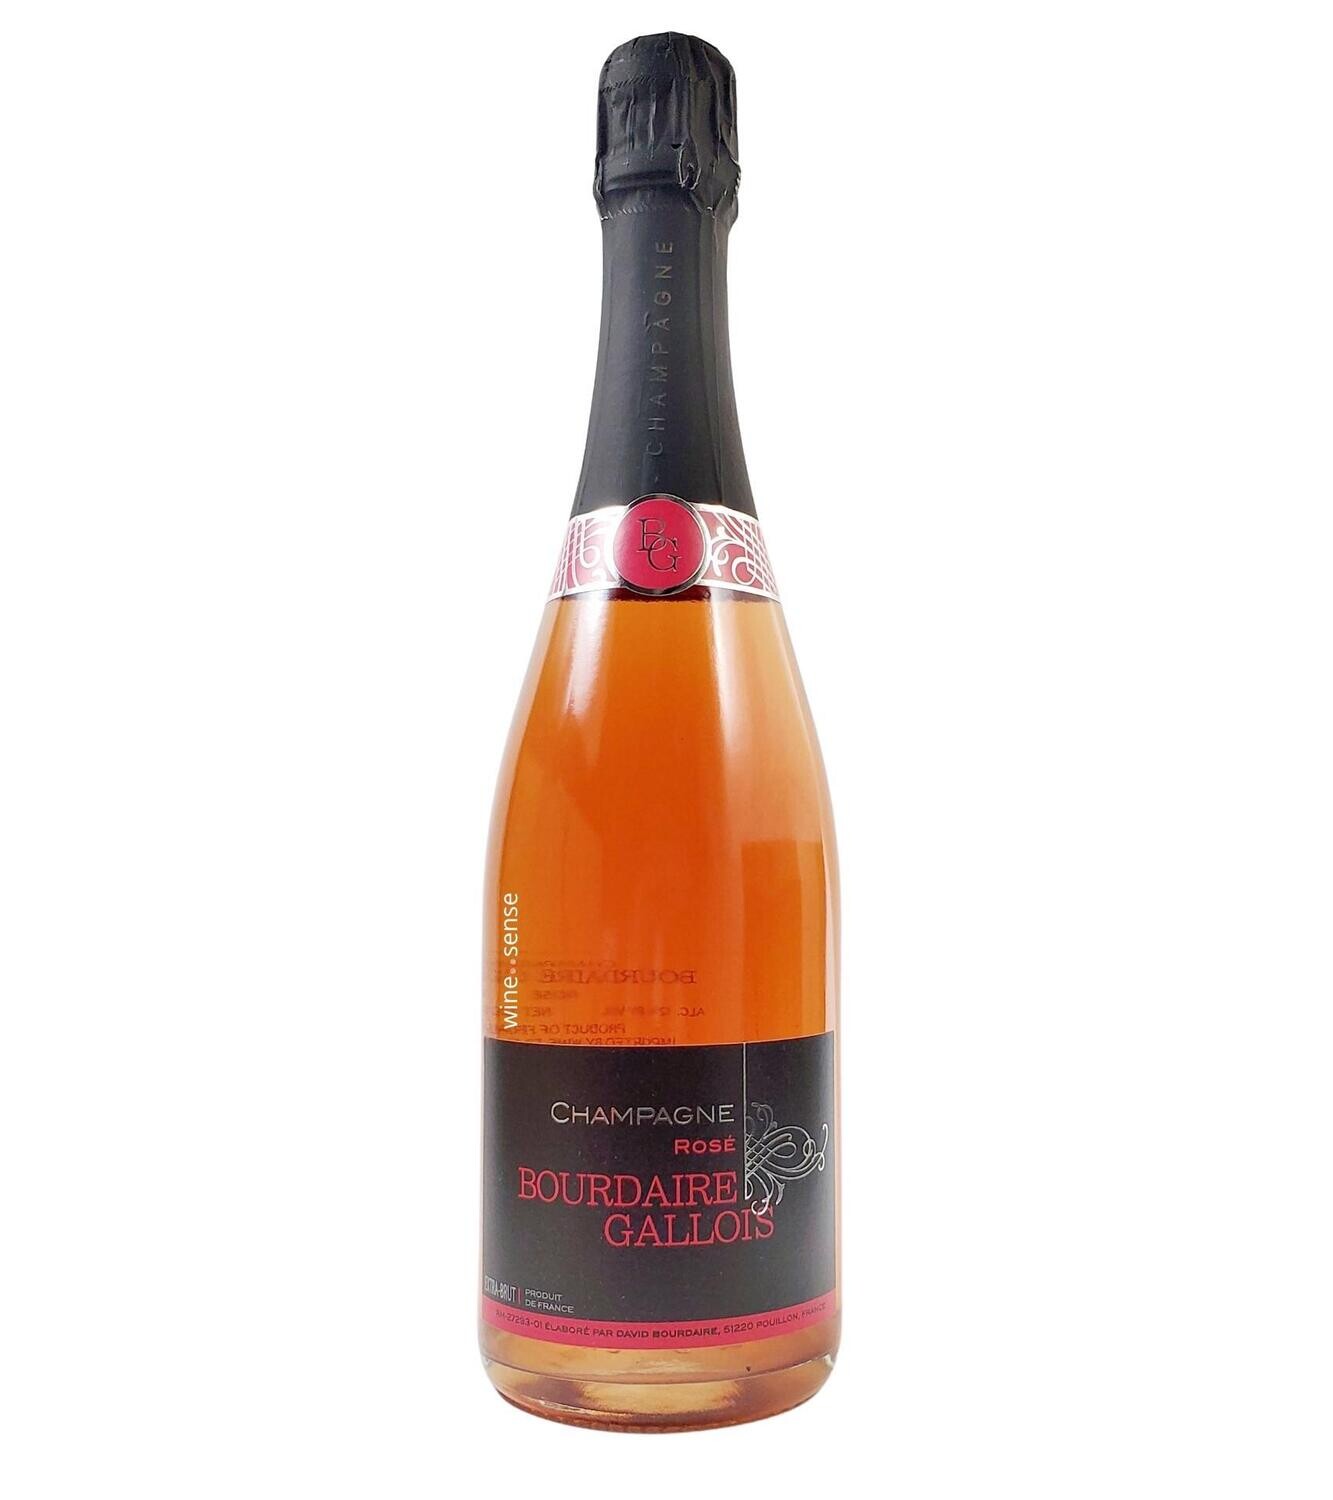 Bourdaire-Gallois, Champagne, Rose